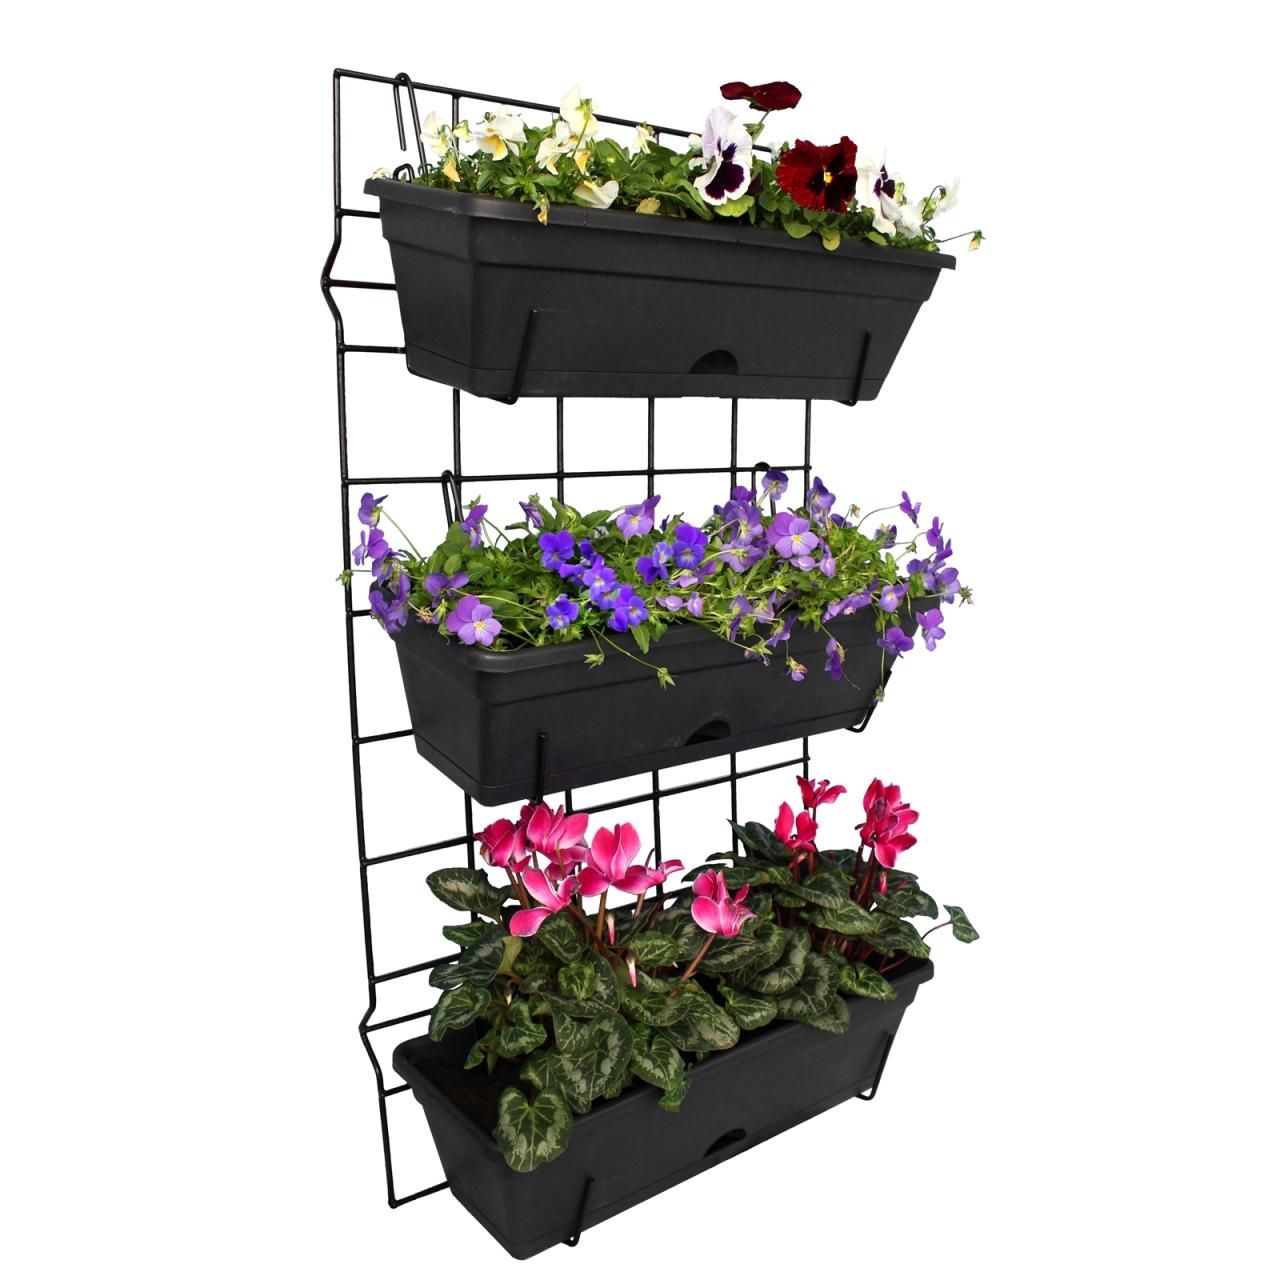 Hanging Plants Indoor | Hanging Pots Bunnings: Enhance Your Outdoor Space with Vertical Greenery